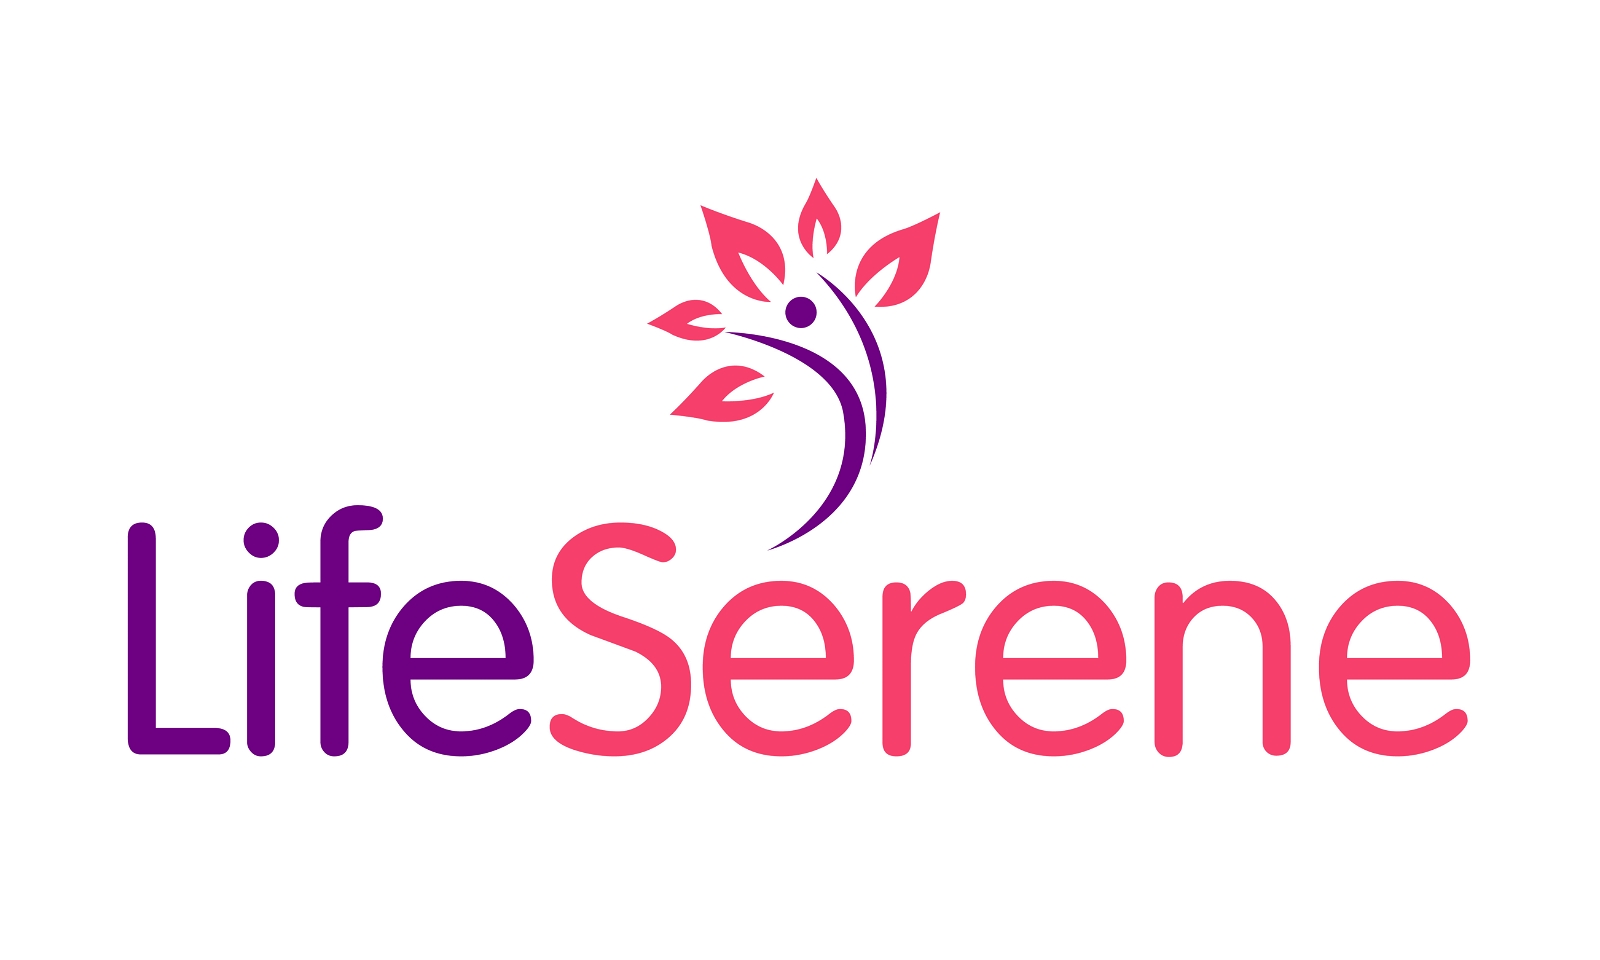 LifeSerene.com - Creative brandable domain for sale